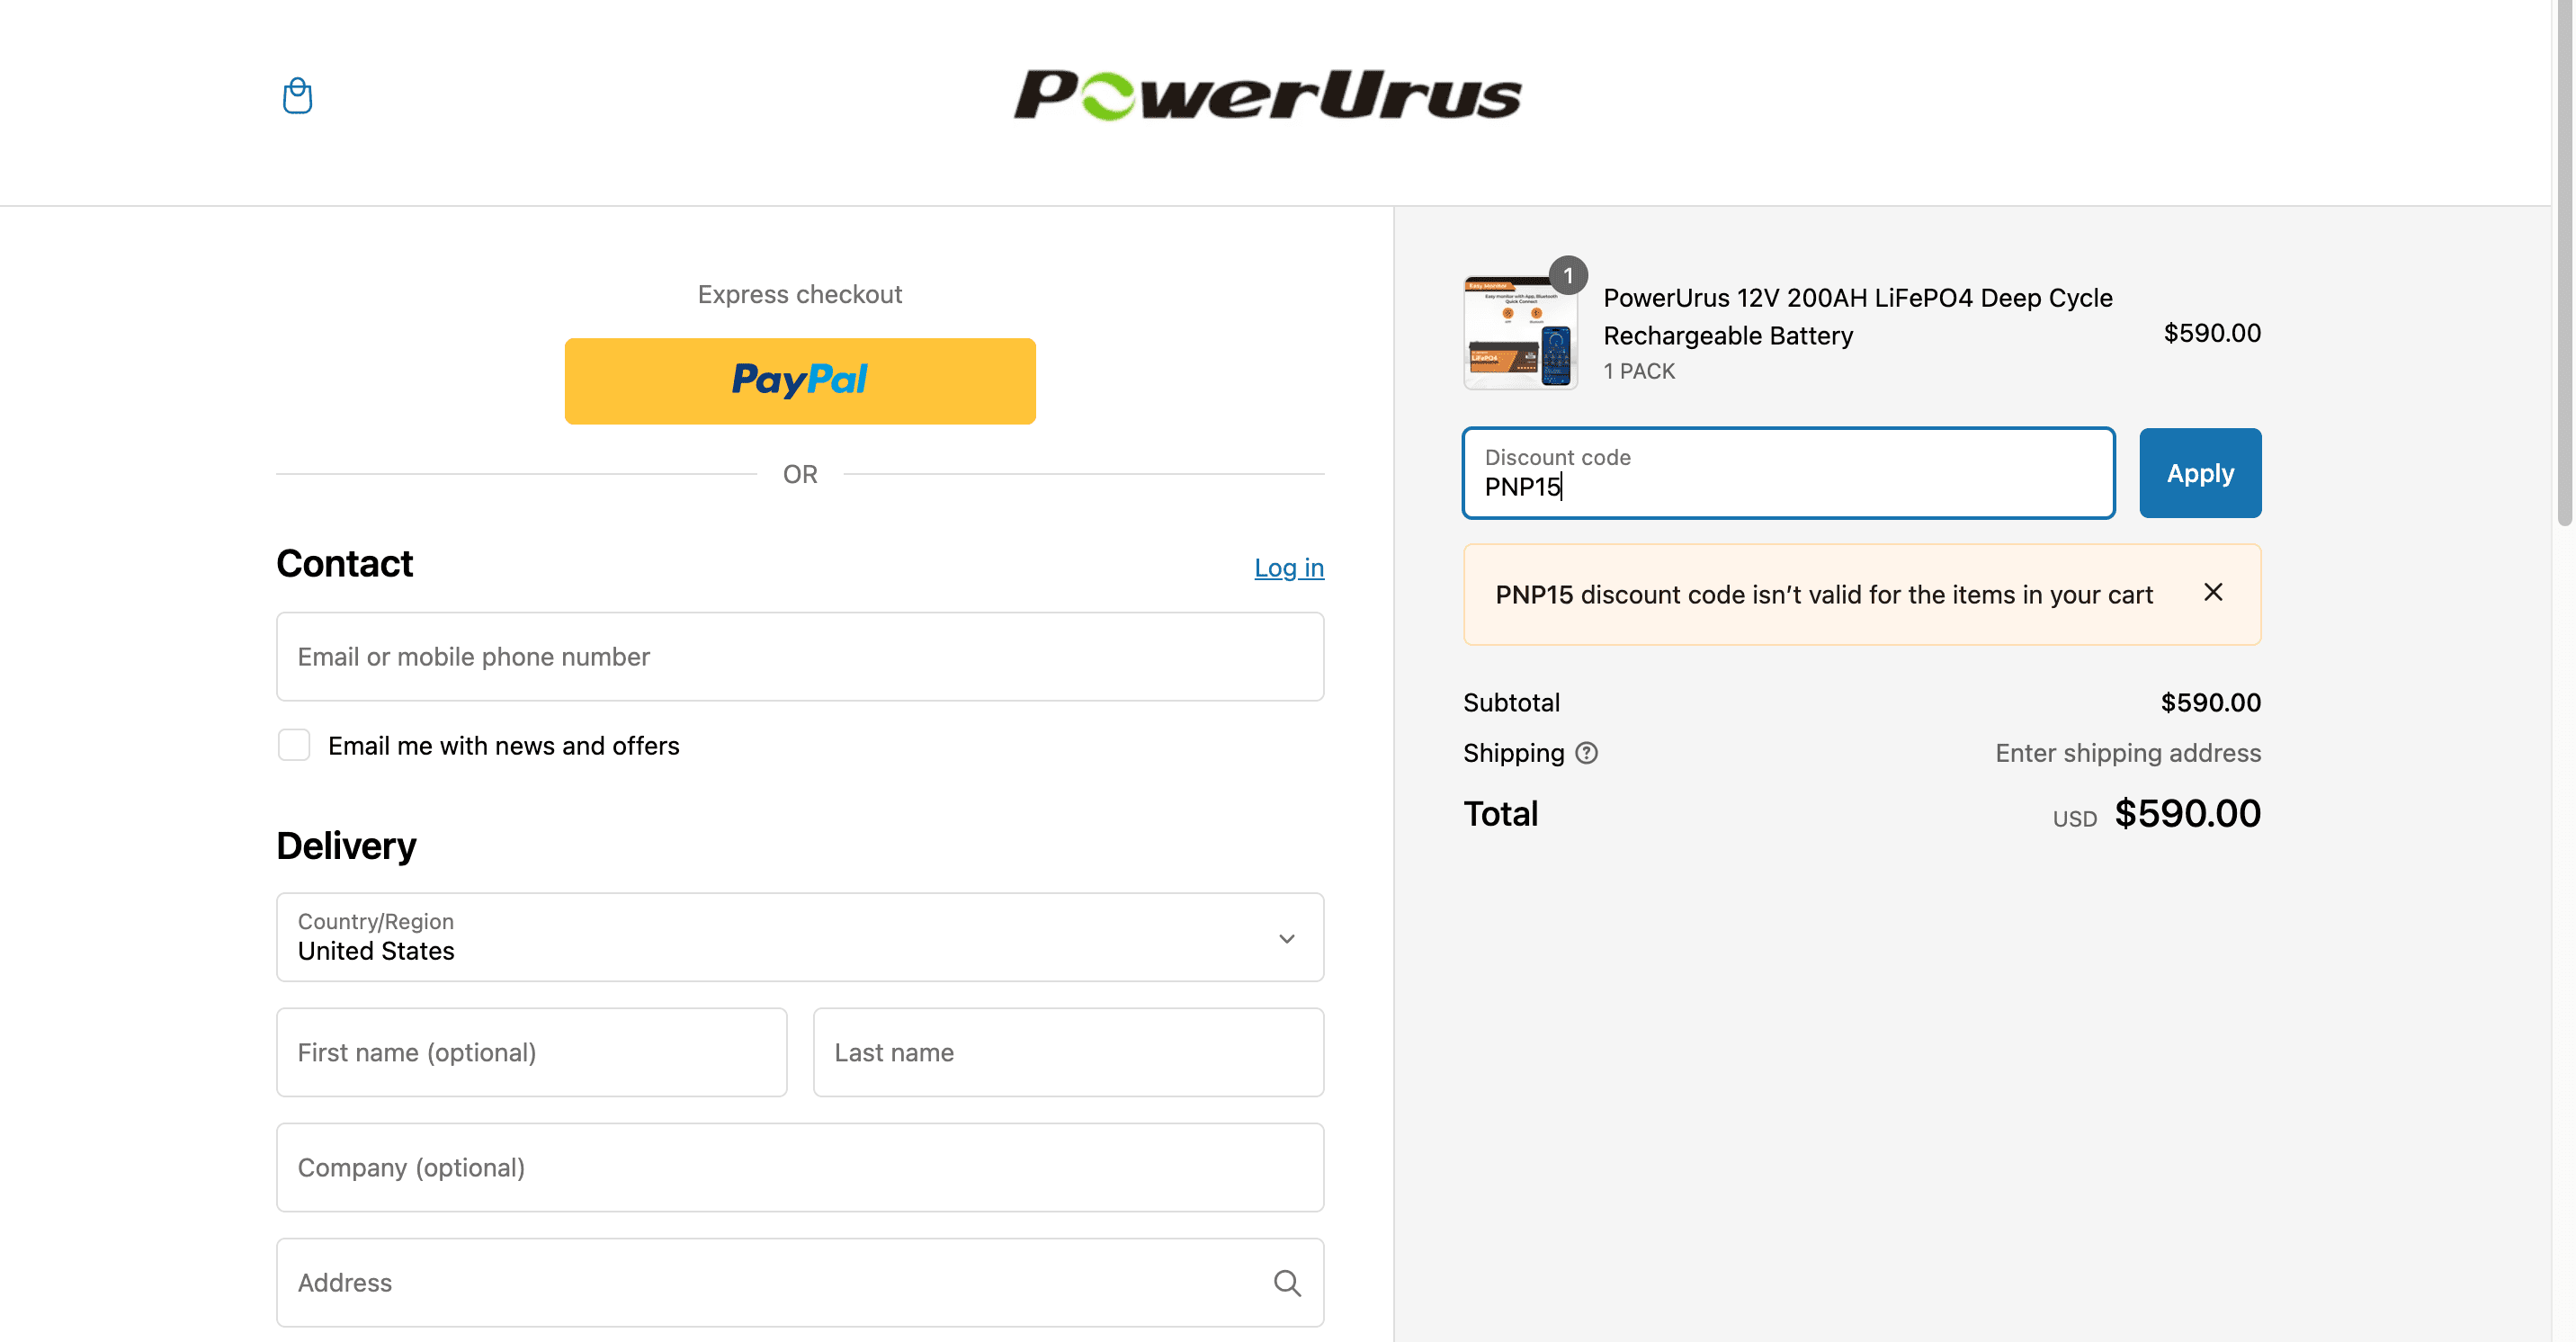 PowerUrus apply coupon code